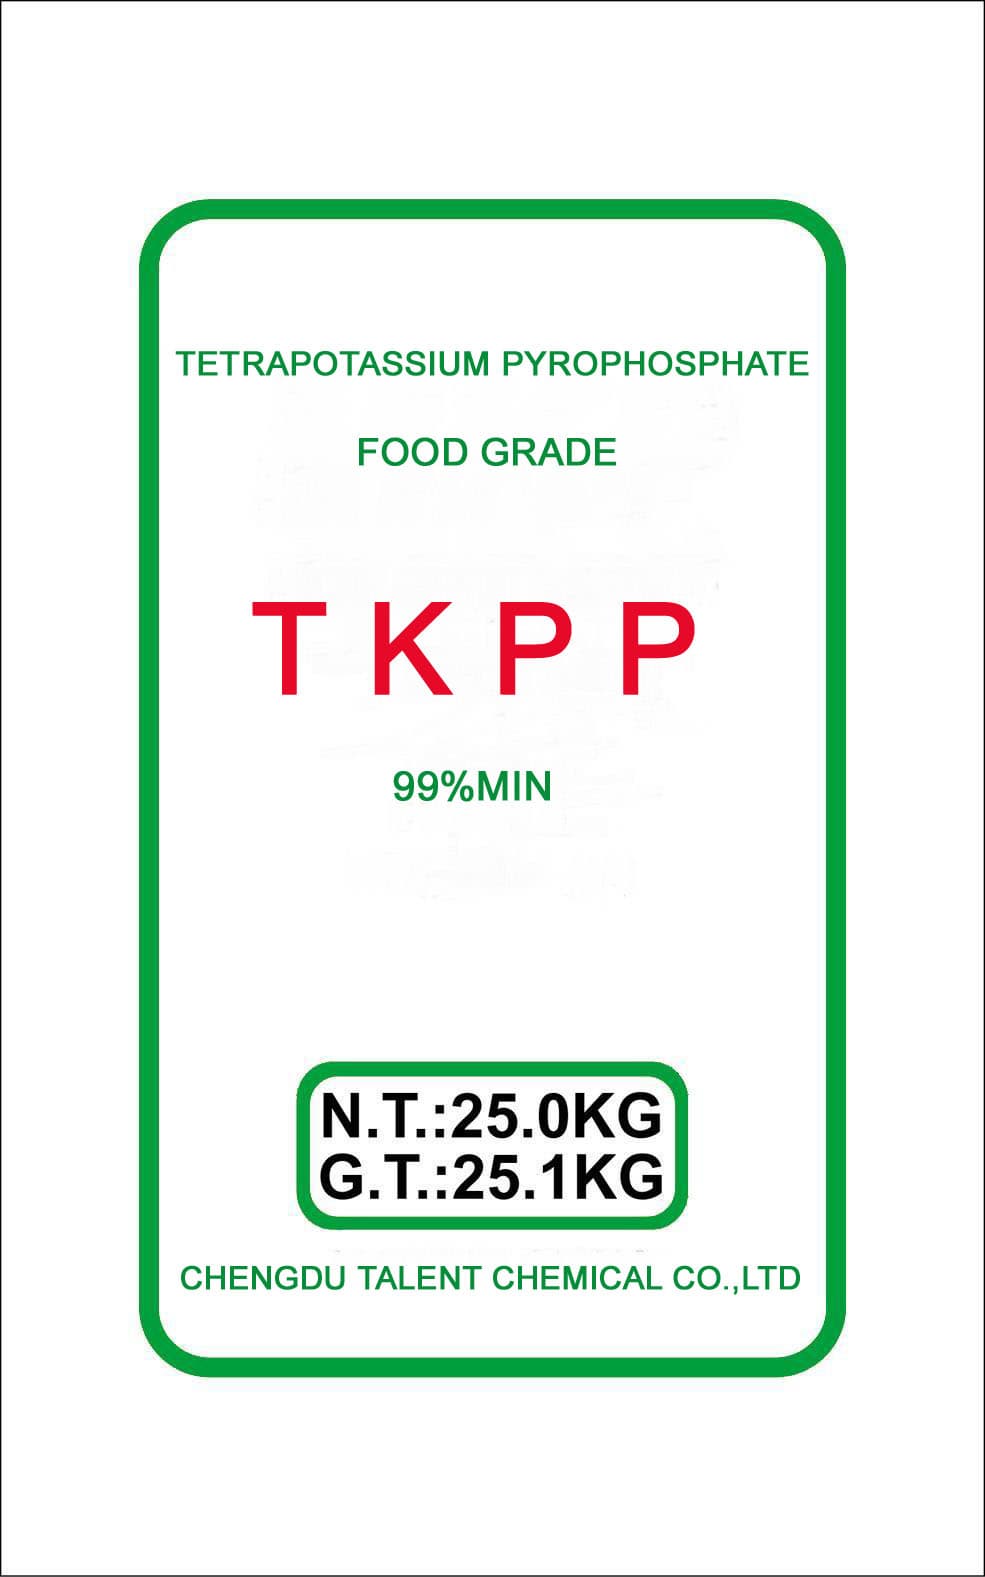 tetrapotassium pyrophosphate